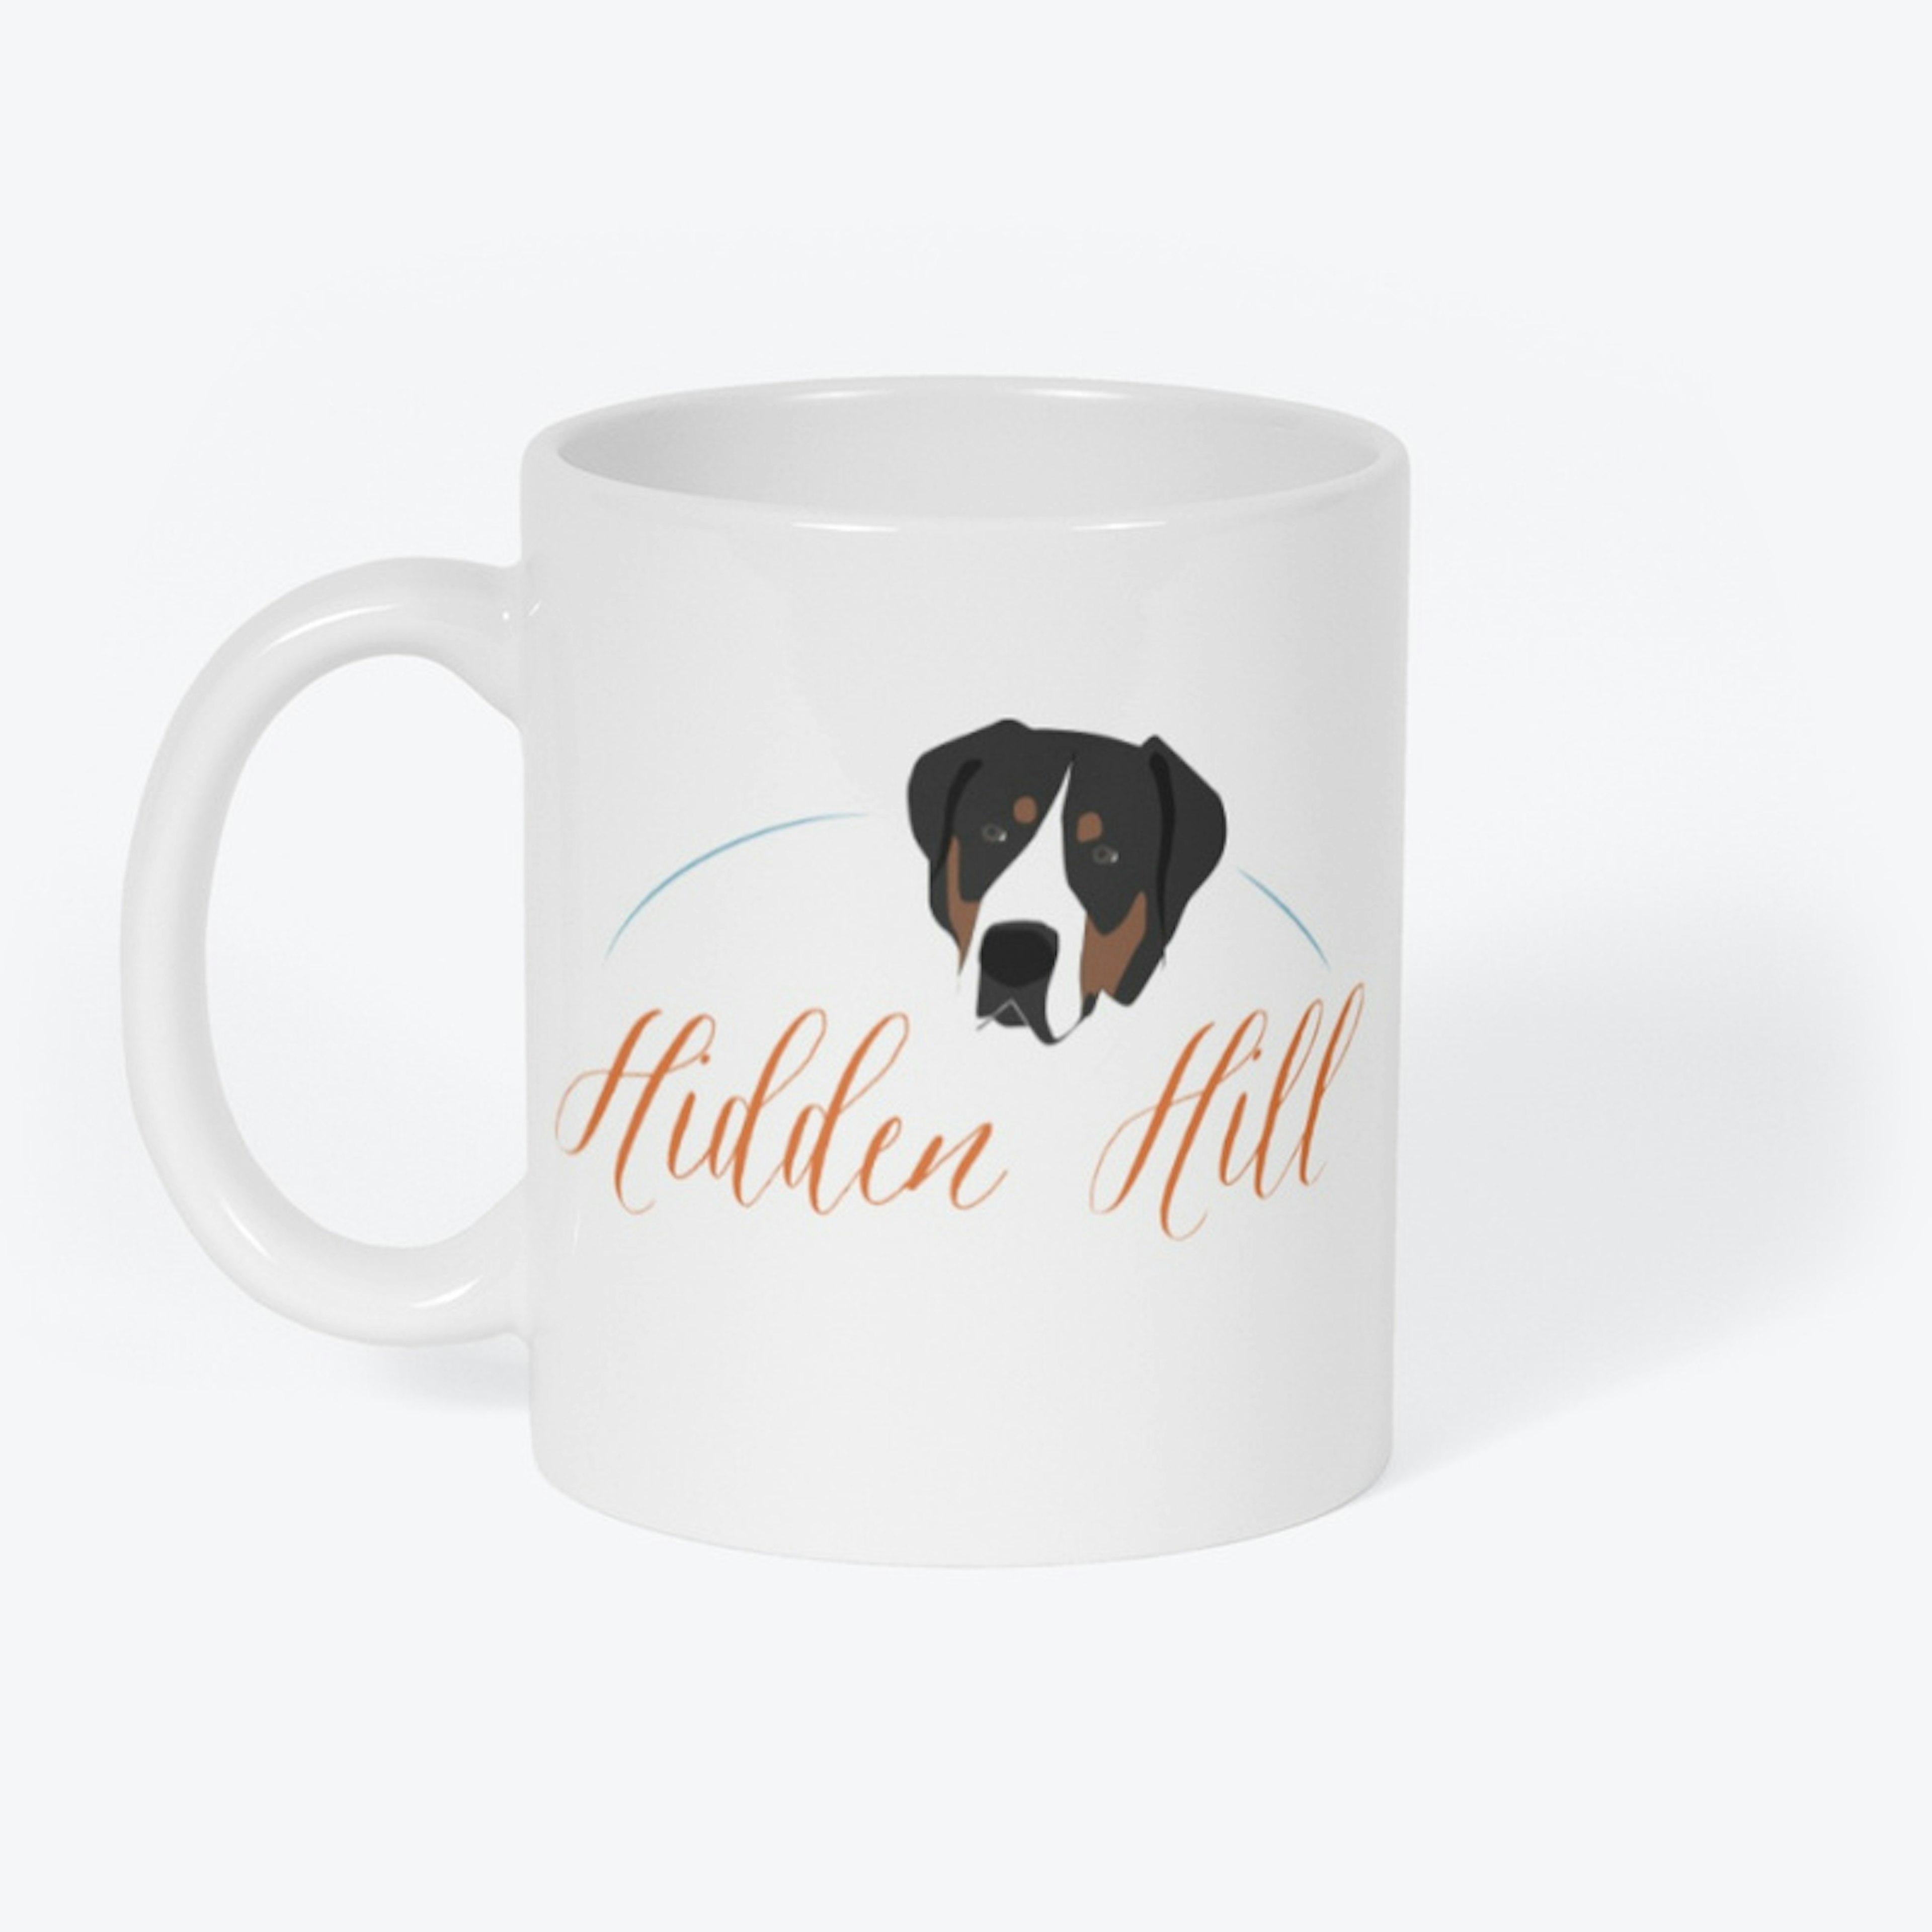 Hidden Hill GSMD Mug